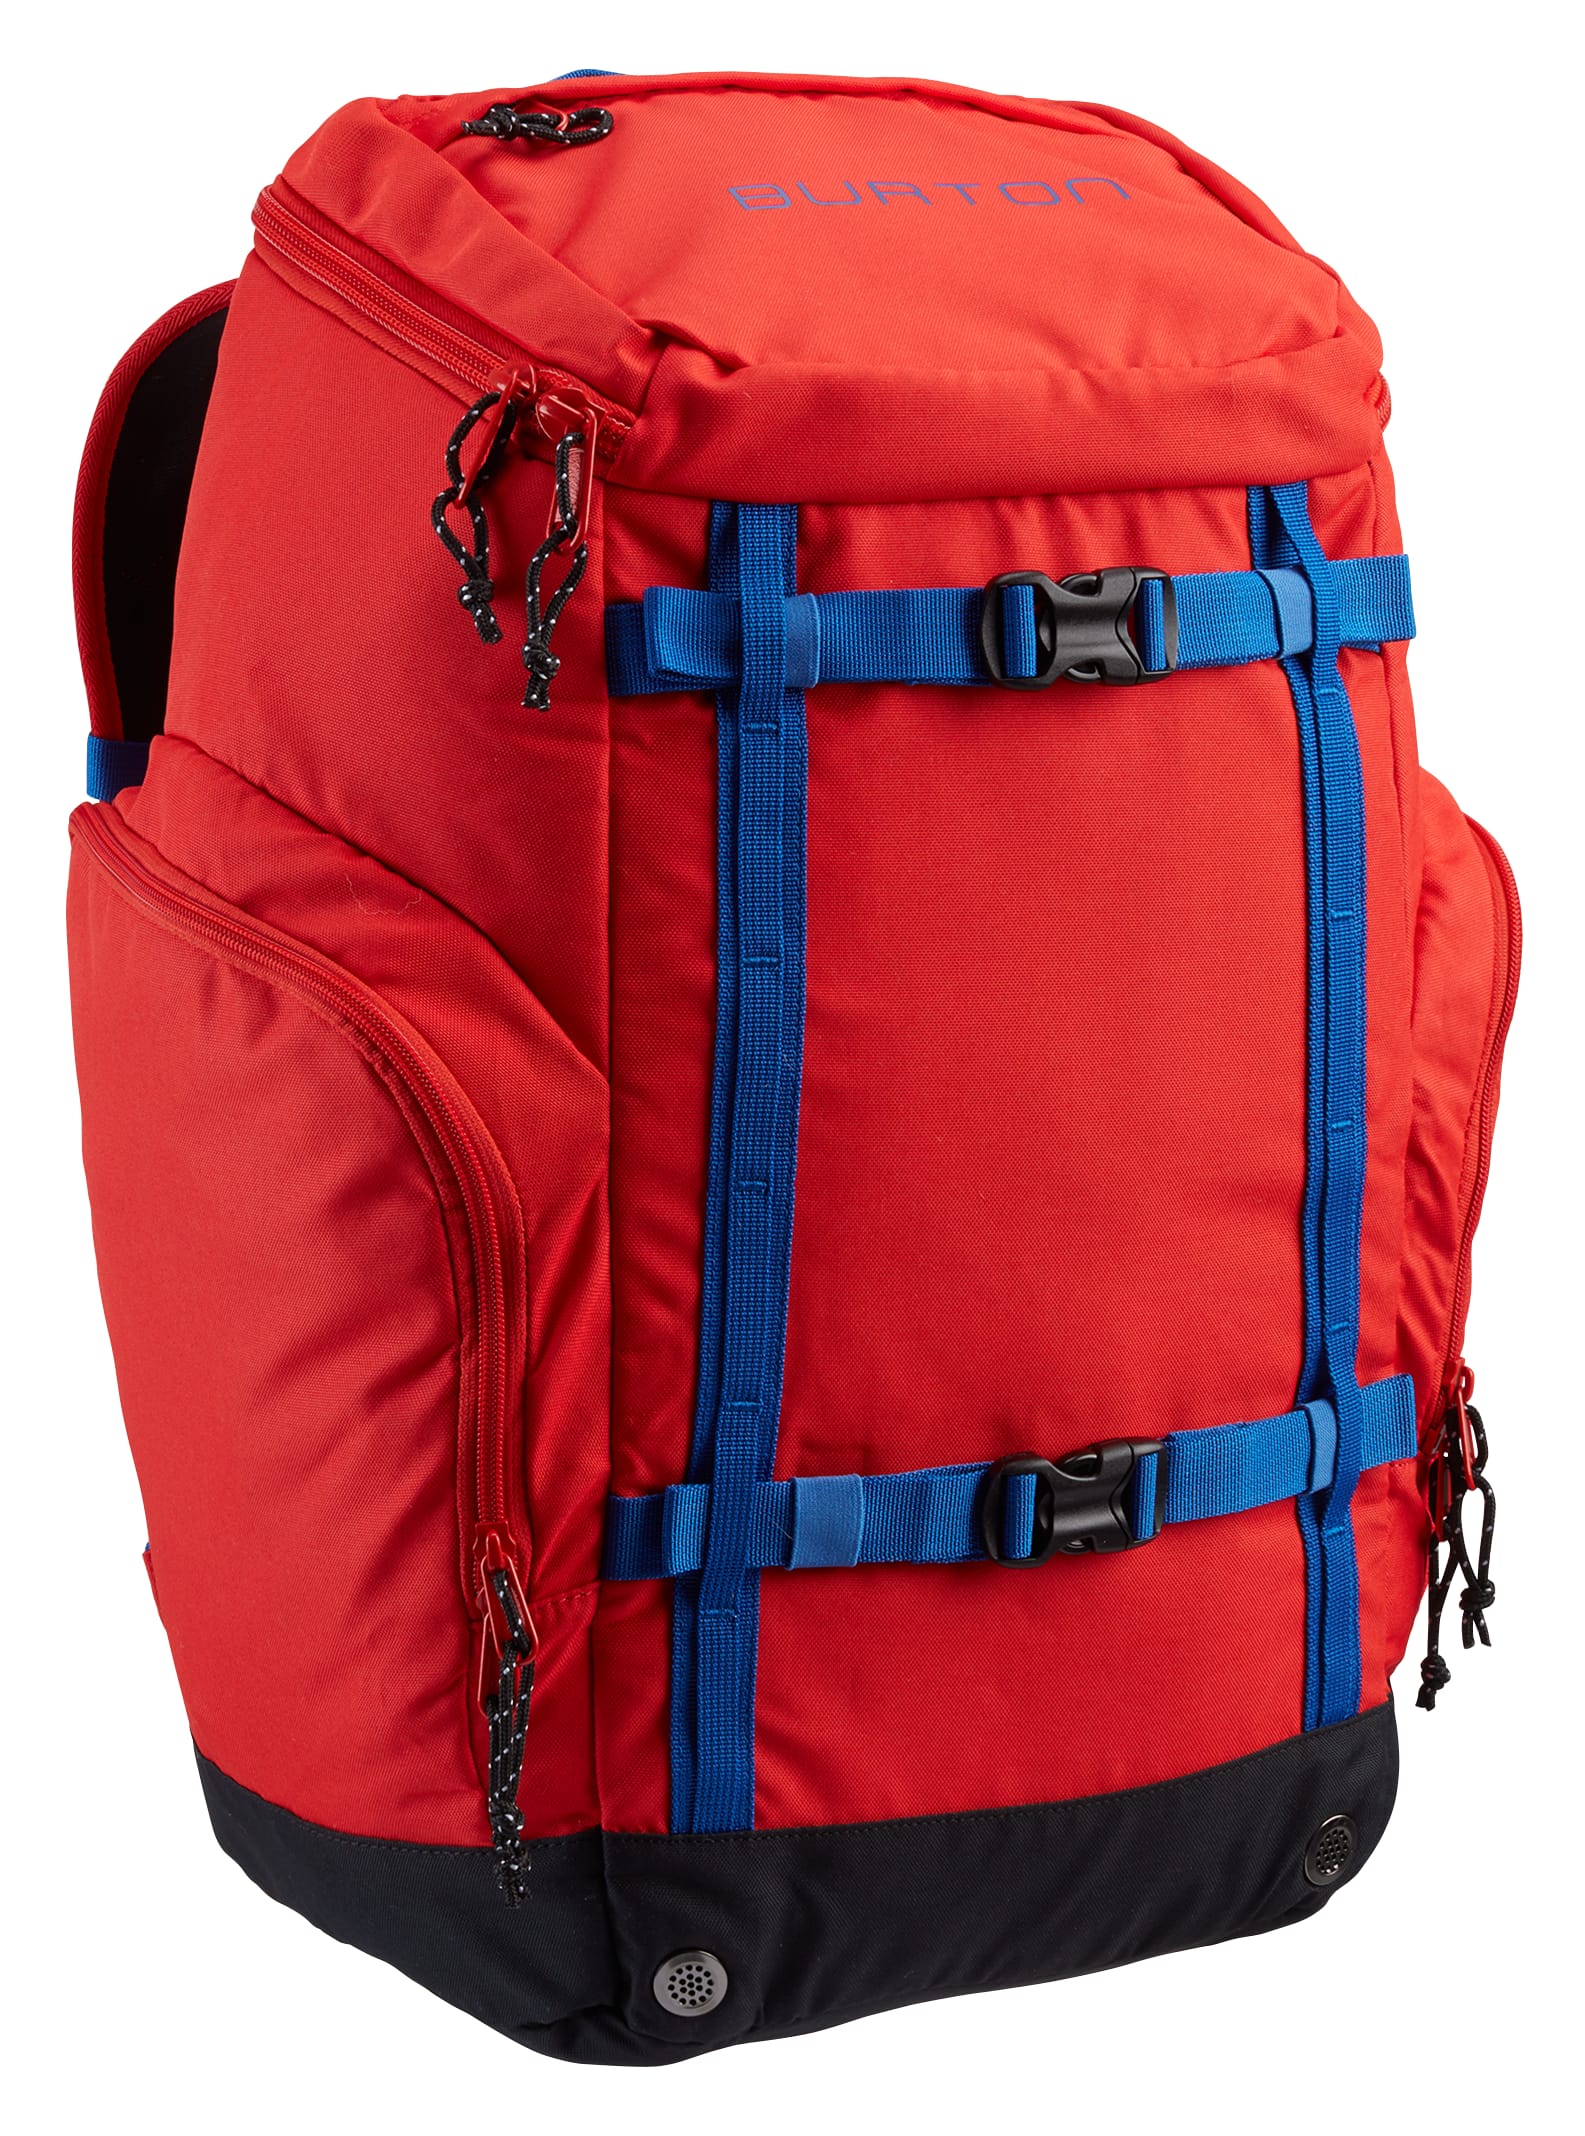 Burton Booter 40L Backpack | Burton.com Winter 2021 US